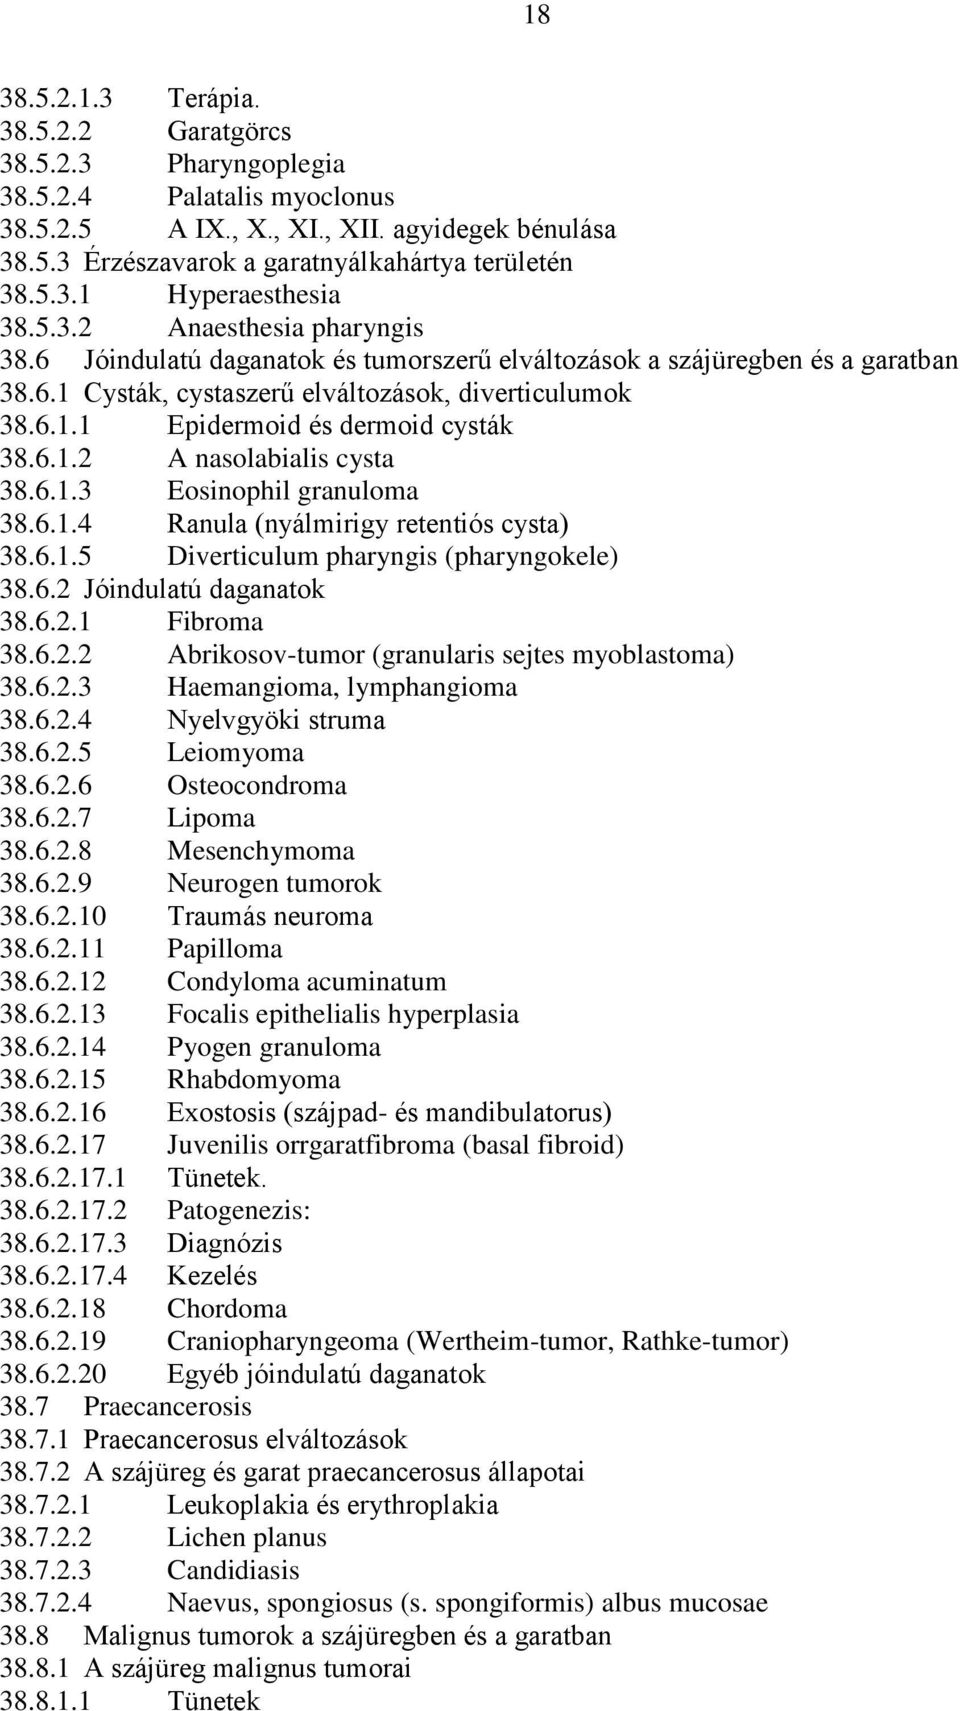 6.1.2 A nasolabialis cysta 38.6.1.3 Eosinophil granuloma 38.6.1.4 Ranula (nyálmirigy retentiós cysta) 38.6.1.5 Diverticulum pharyngis (pharyngokele) 38.6.2 Jóindulatú daganatok 38.6.2.1 Fibroma 38.6.2.2 Abrikosov-tumor (granularis sejtes myoblastoma) 38.